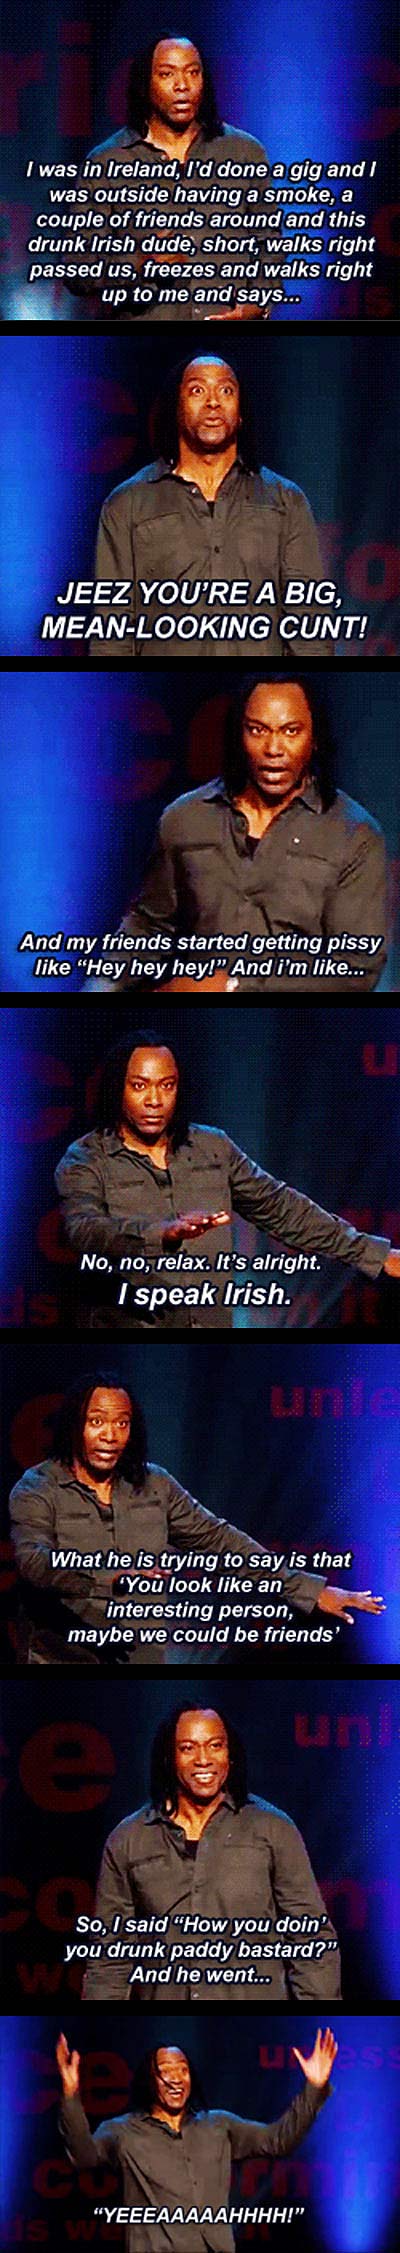 It's alright, I speak Irish